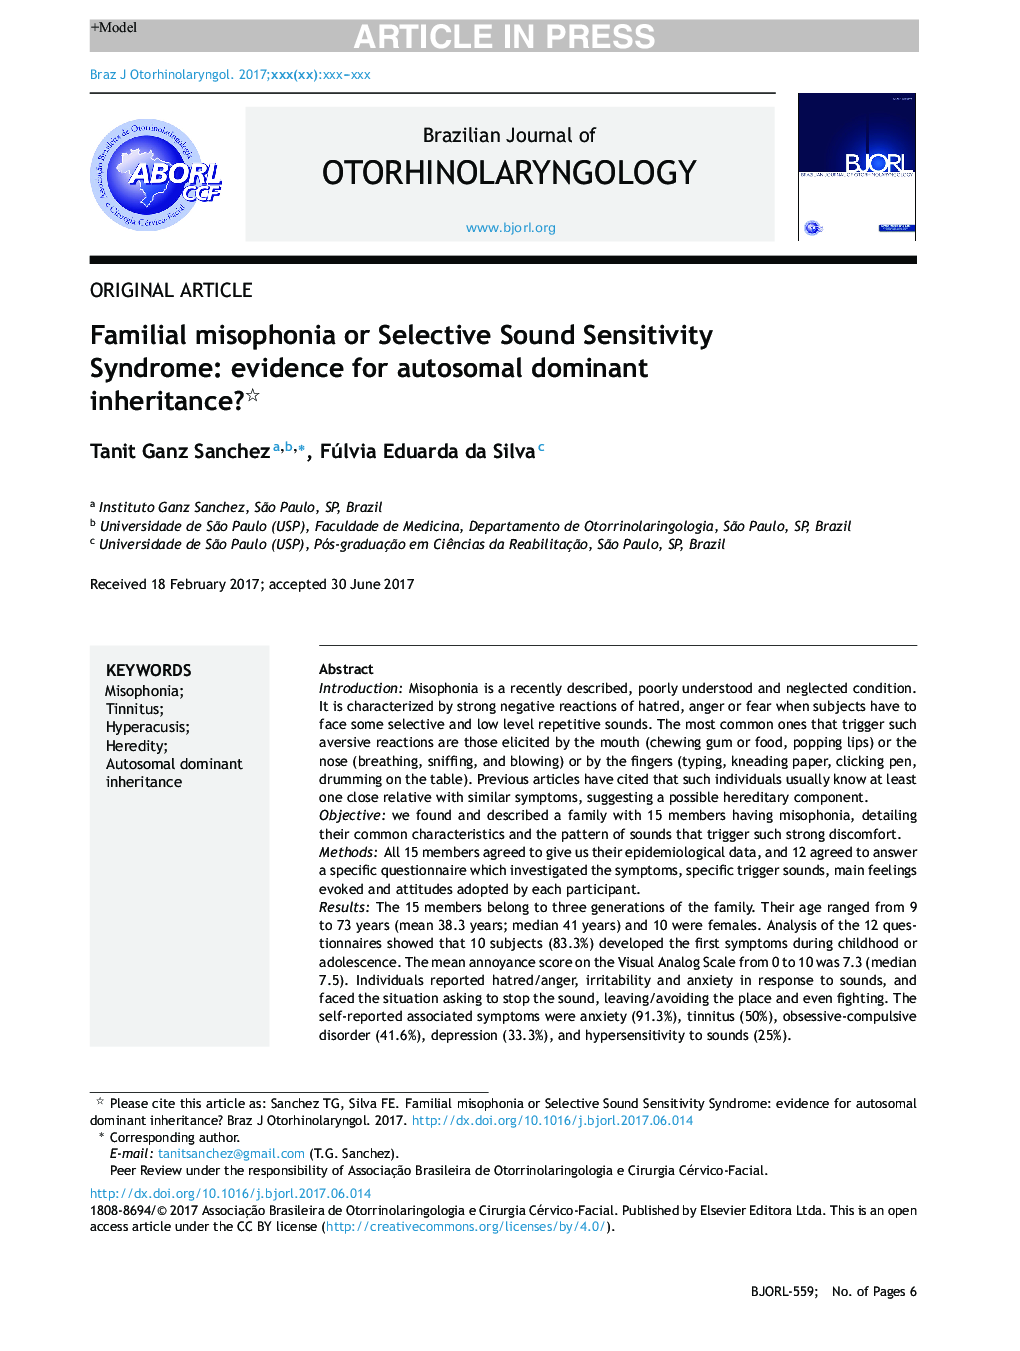 Familial misophonia or selective sound sensitivity syndrome : evidence for autosomal dominant inheritance?